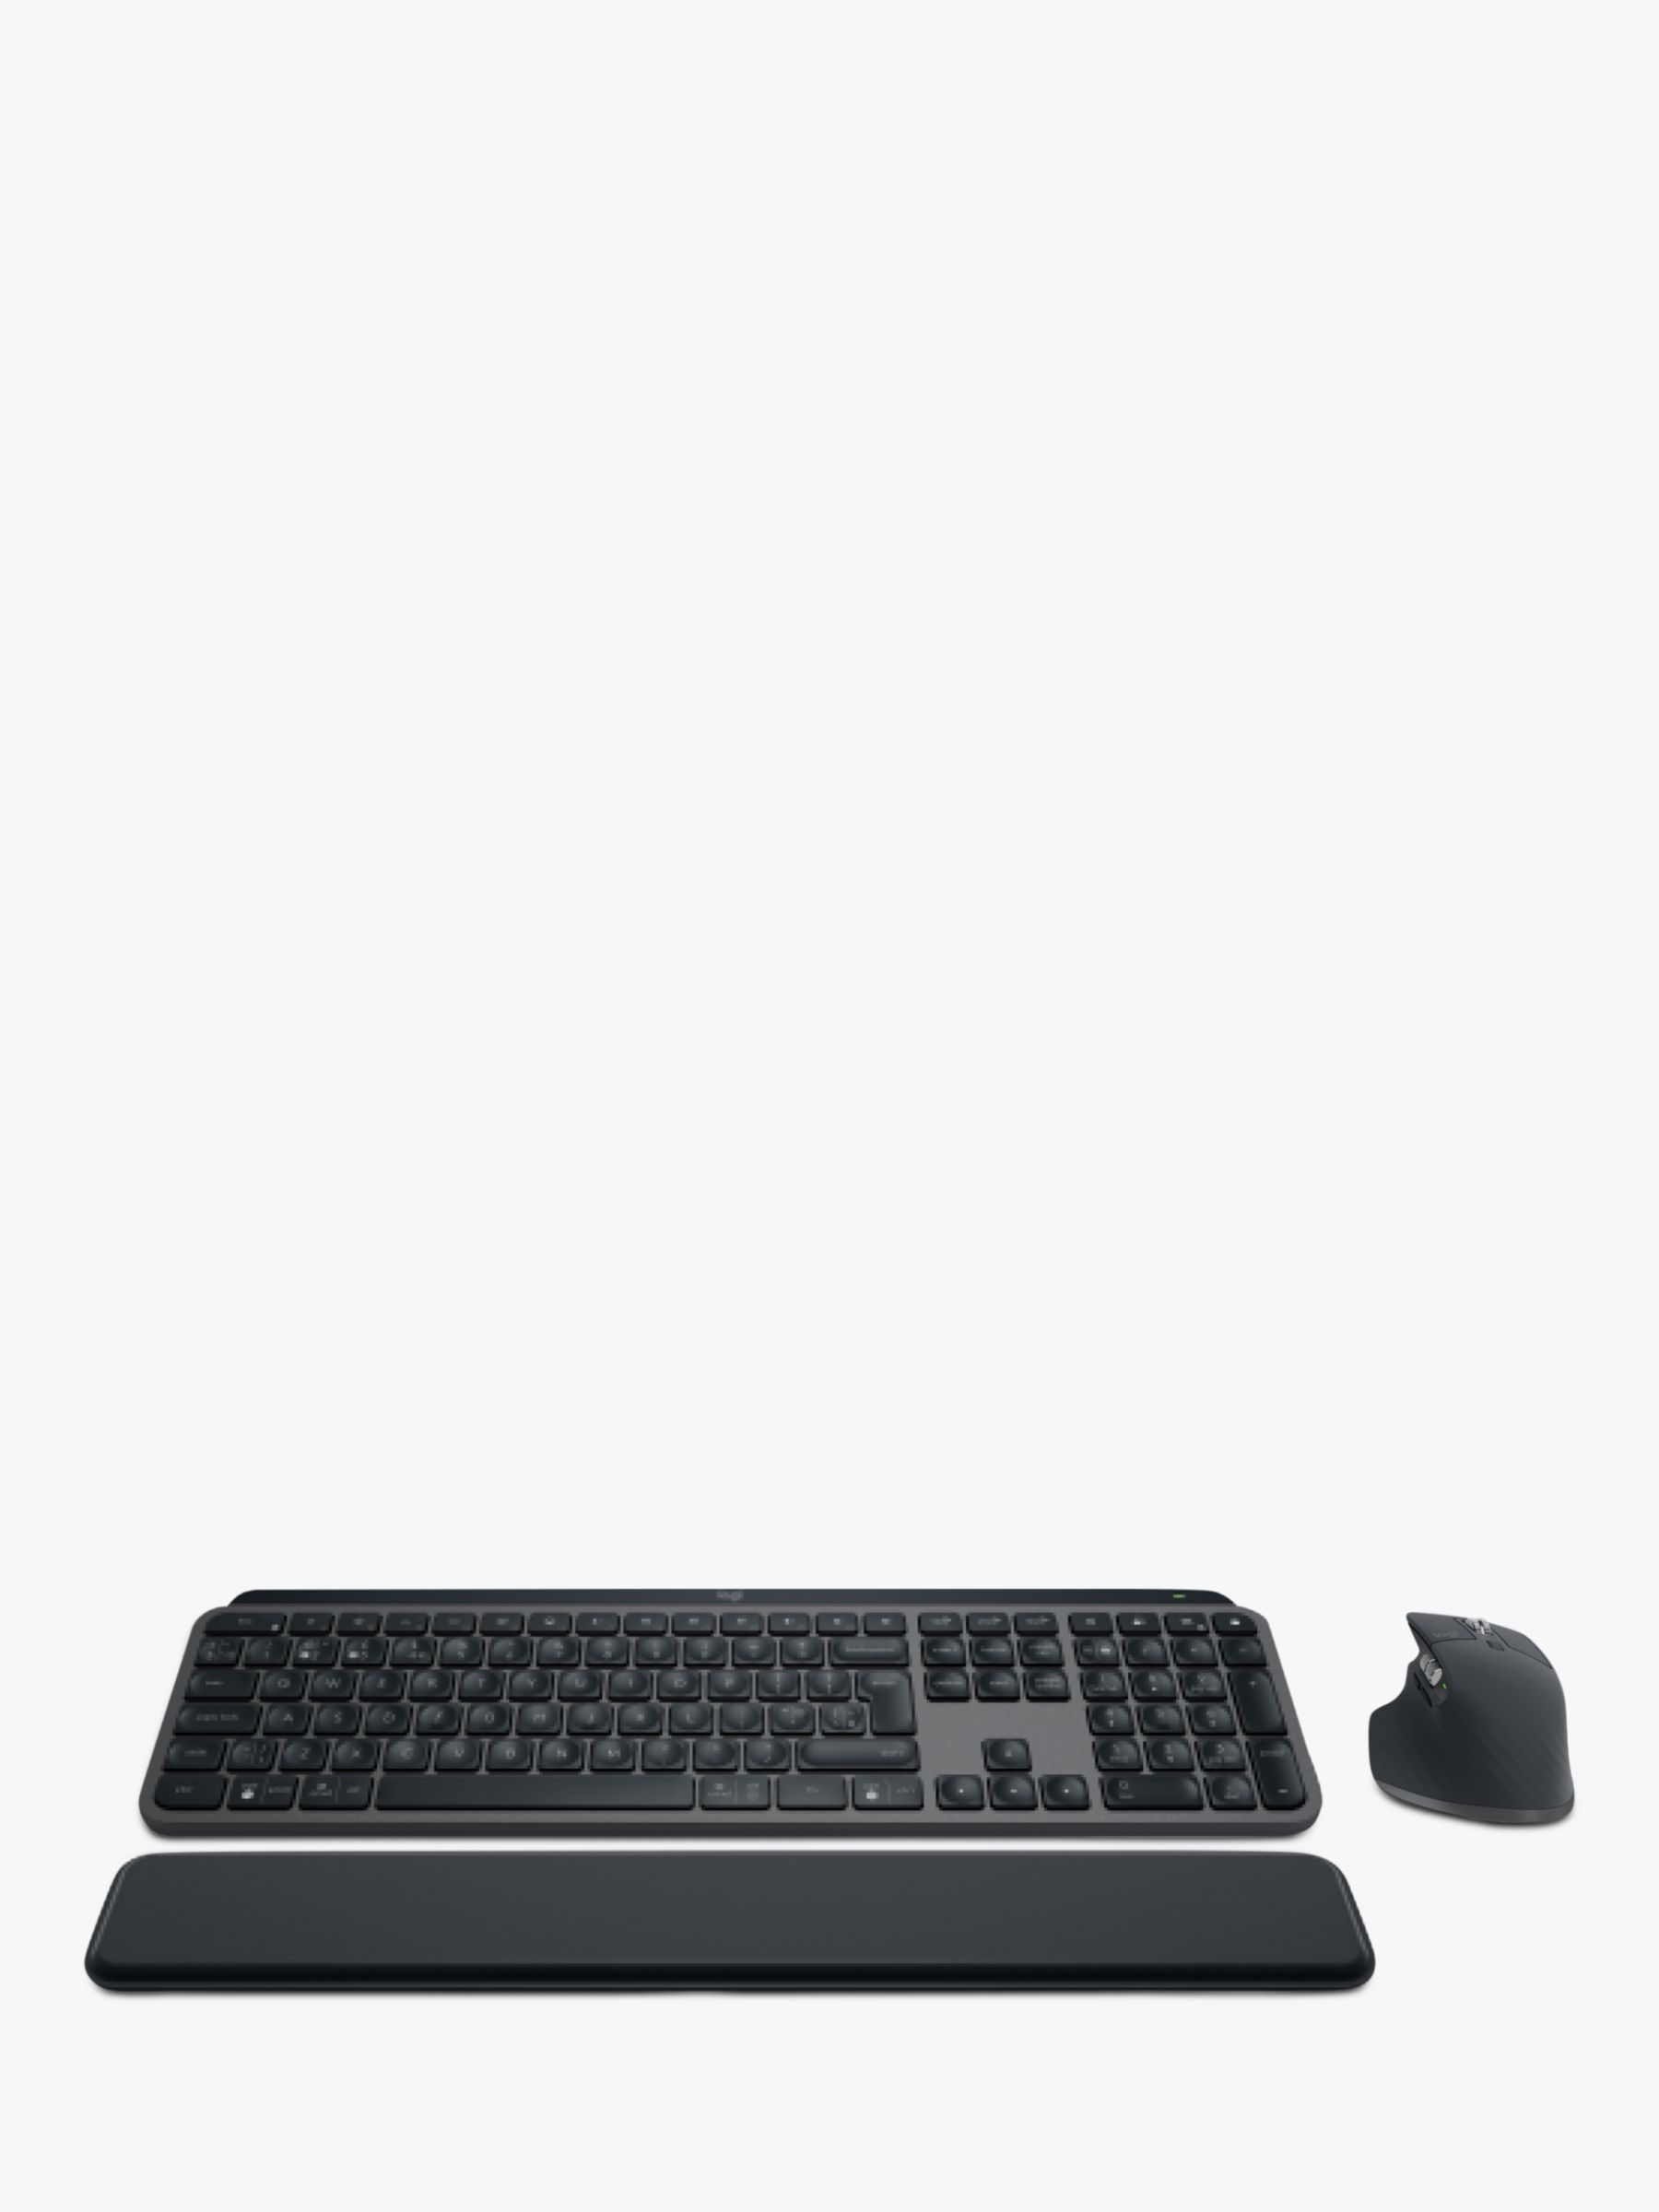 MX Keys S + Master 3S Keyboard Mouse Combo